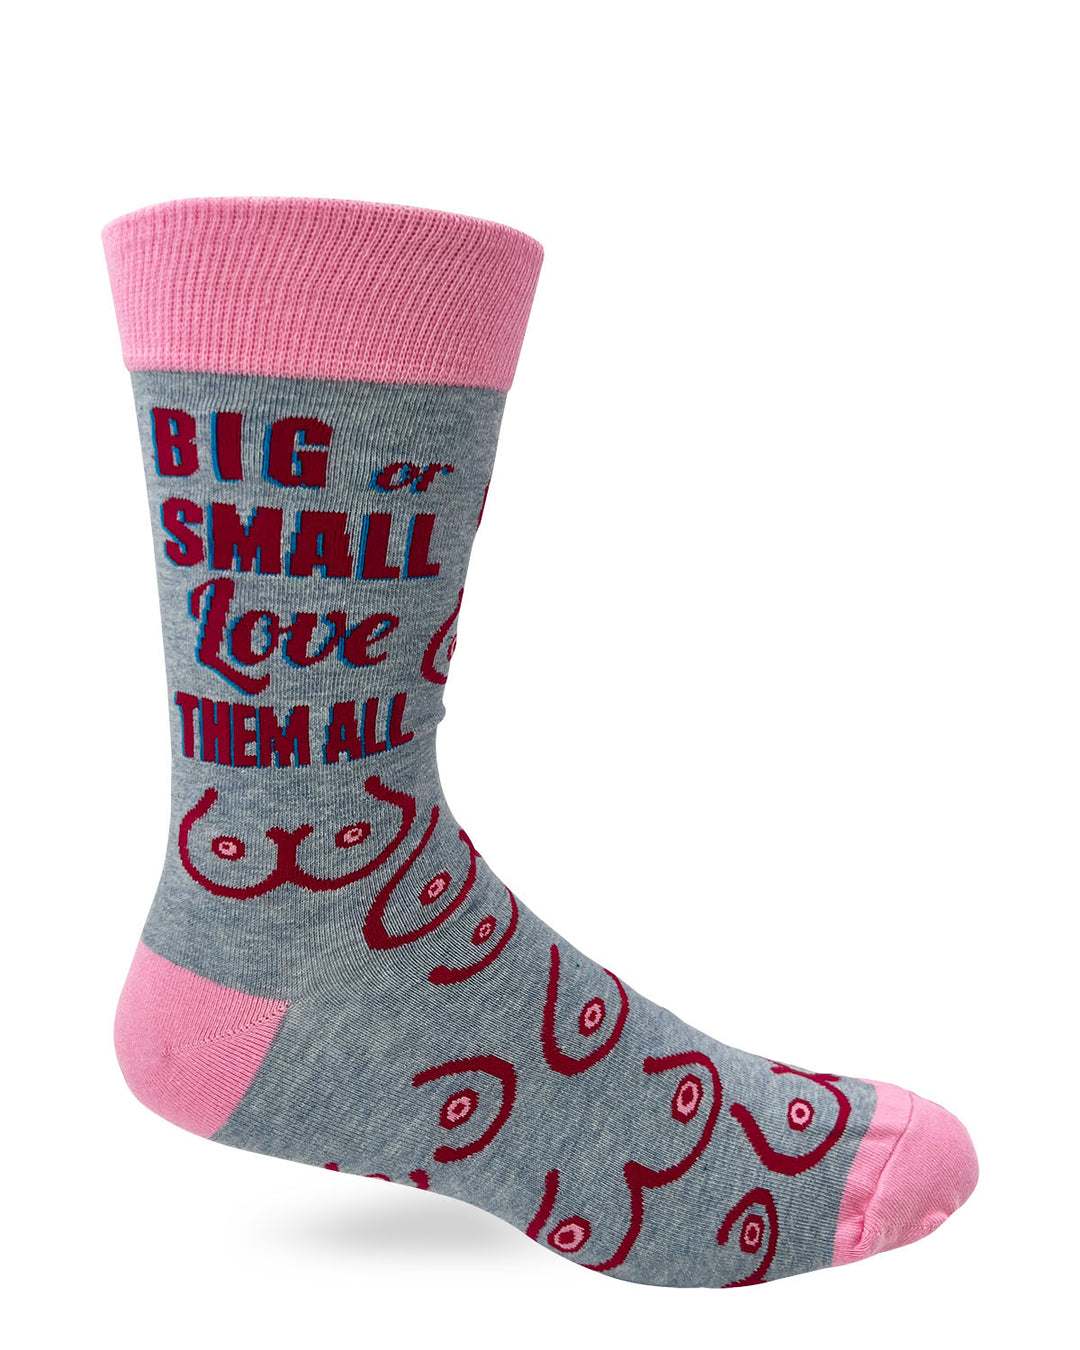 Big Or Small Love Them All Men's Novelty Crew Socks